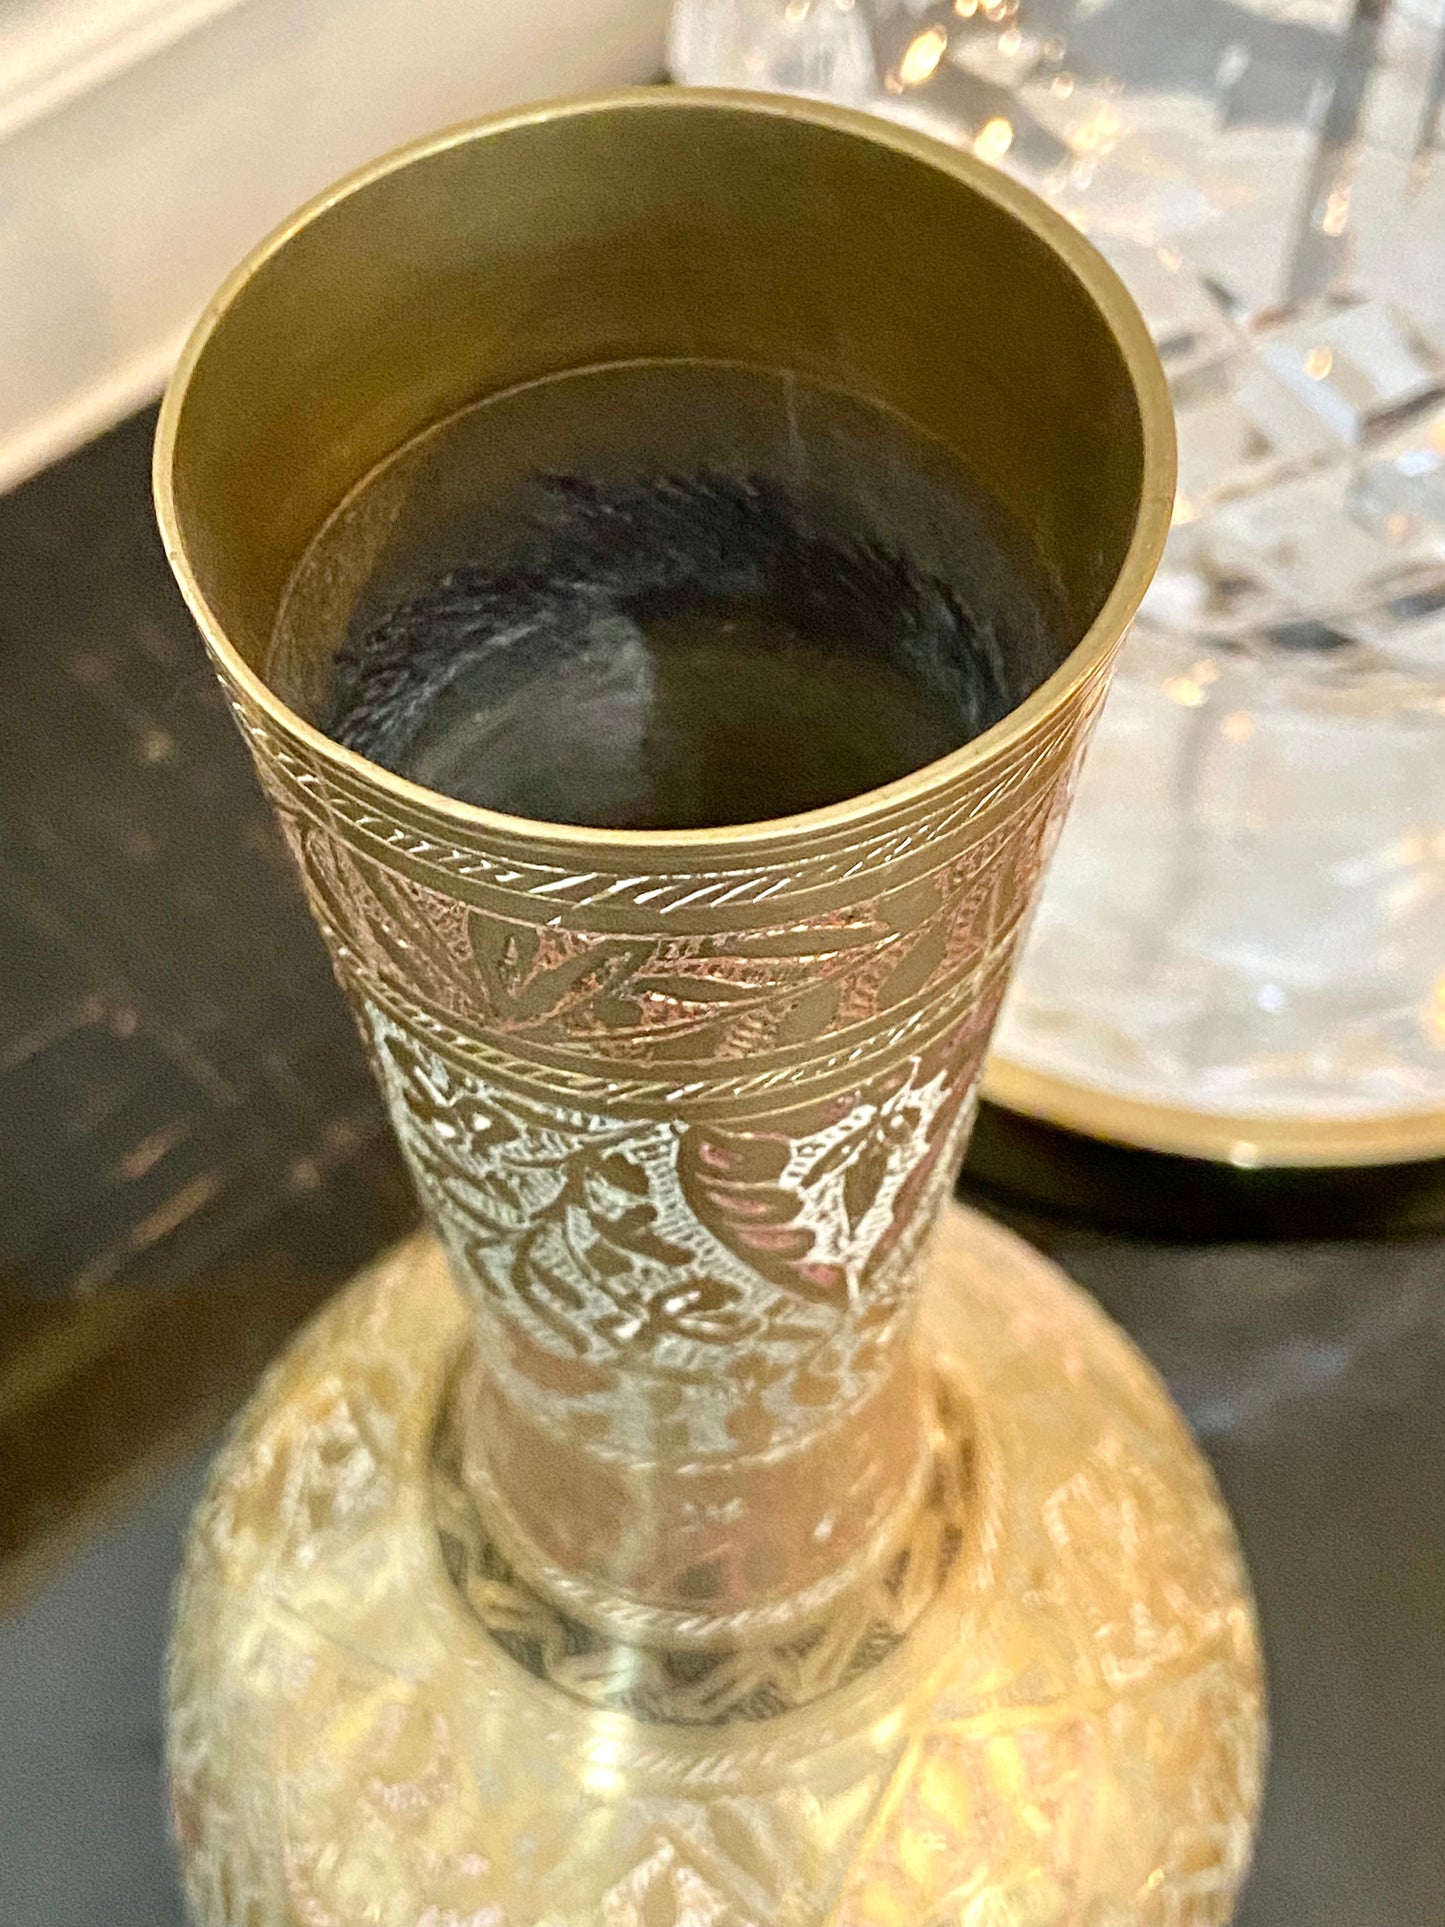 Vintage brass cloisonné tall vase